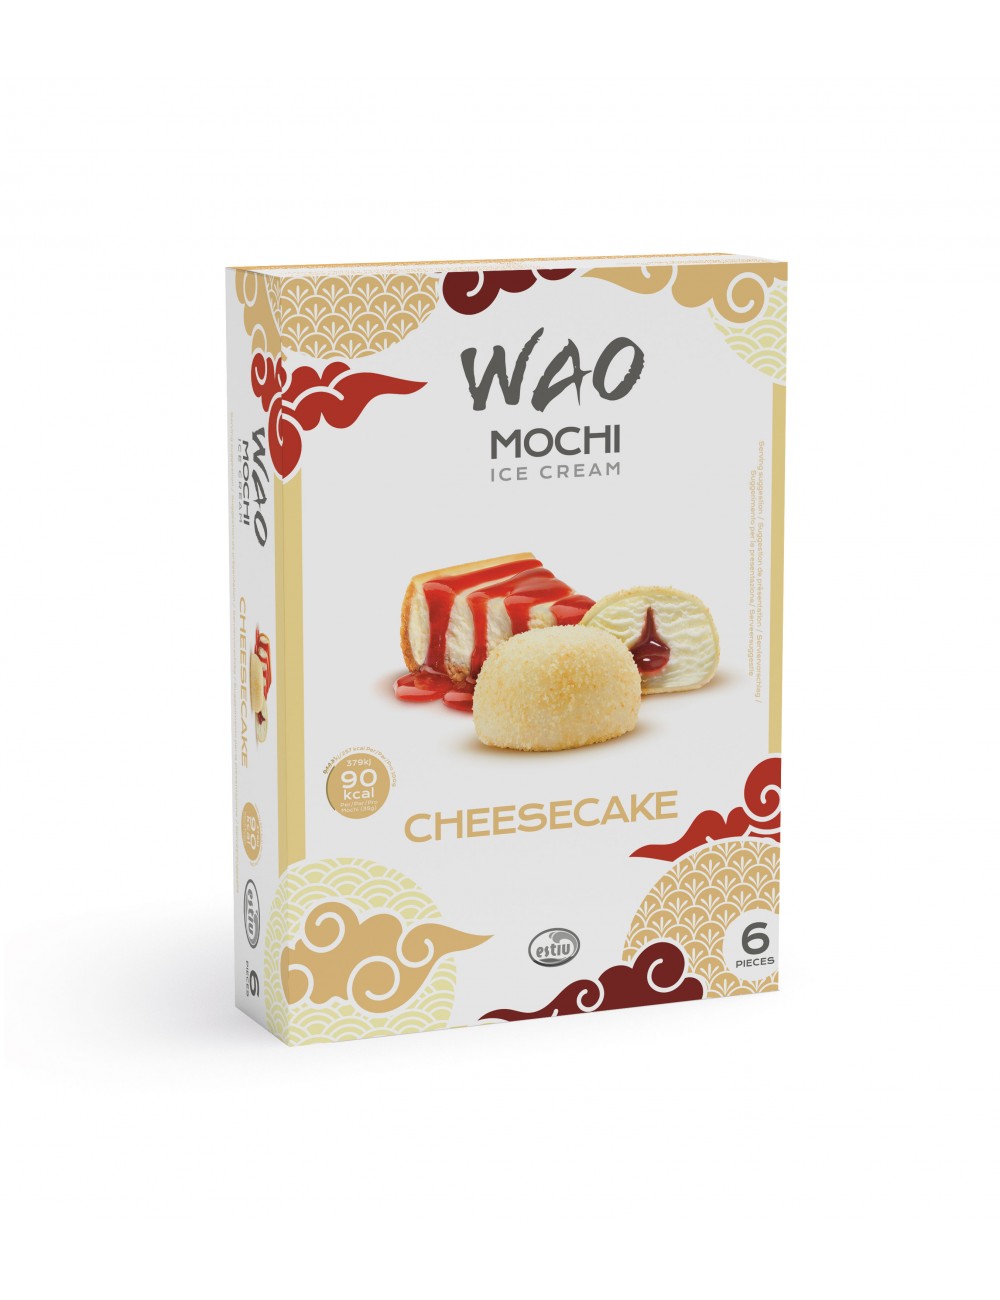 Mochi Glacé Wao Cheesecake